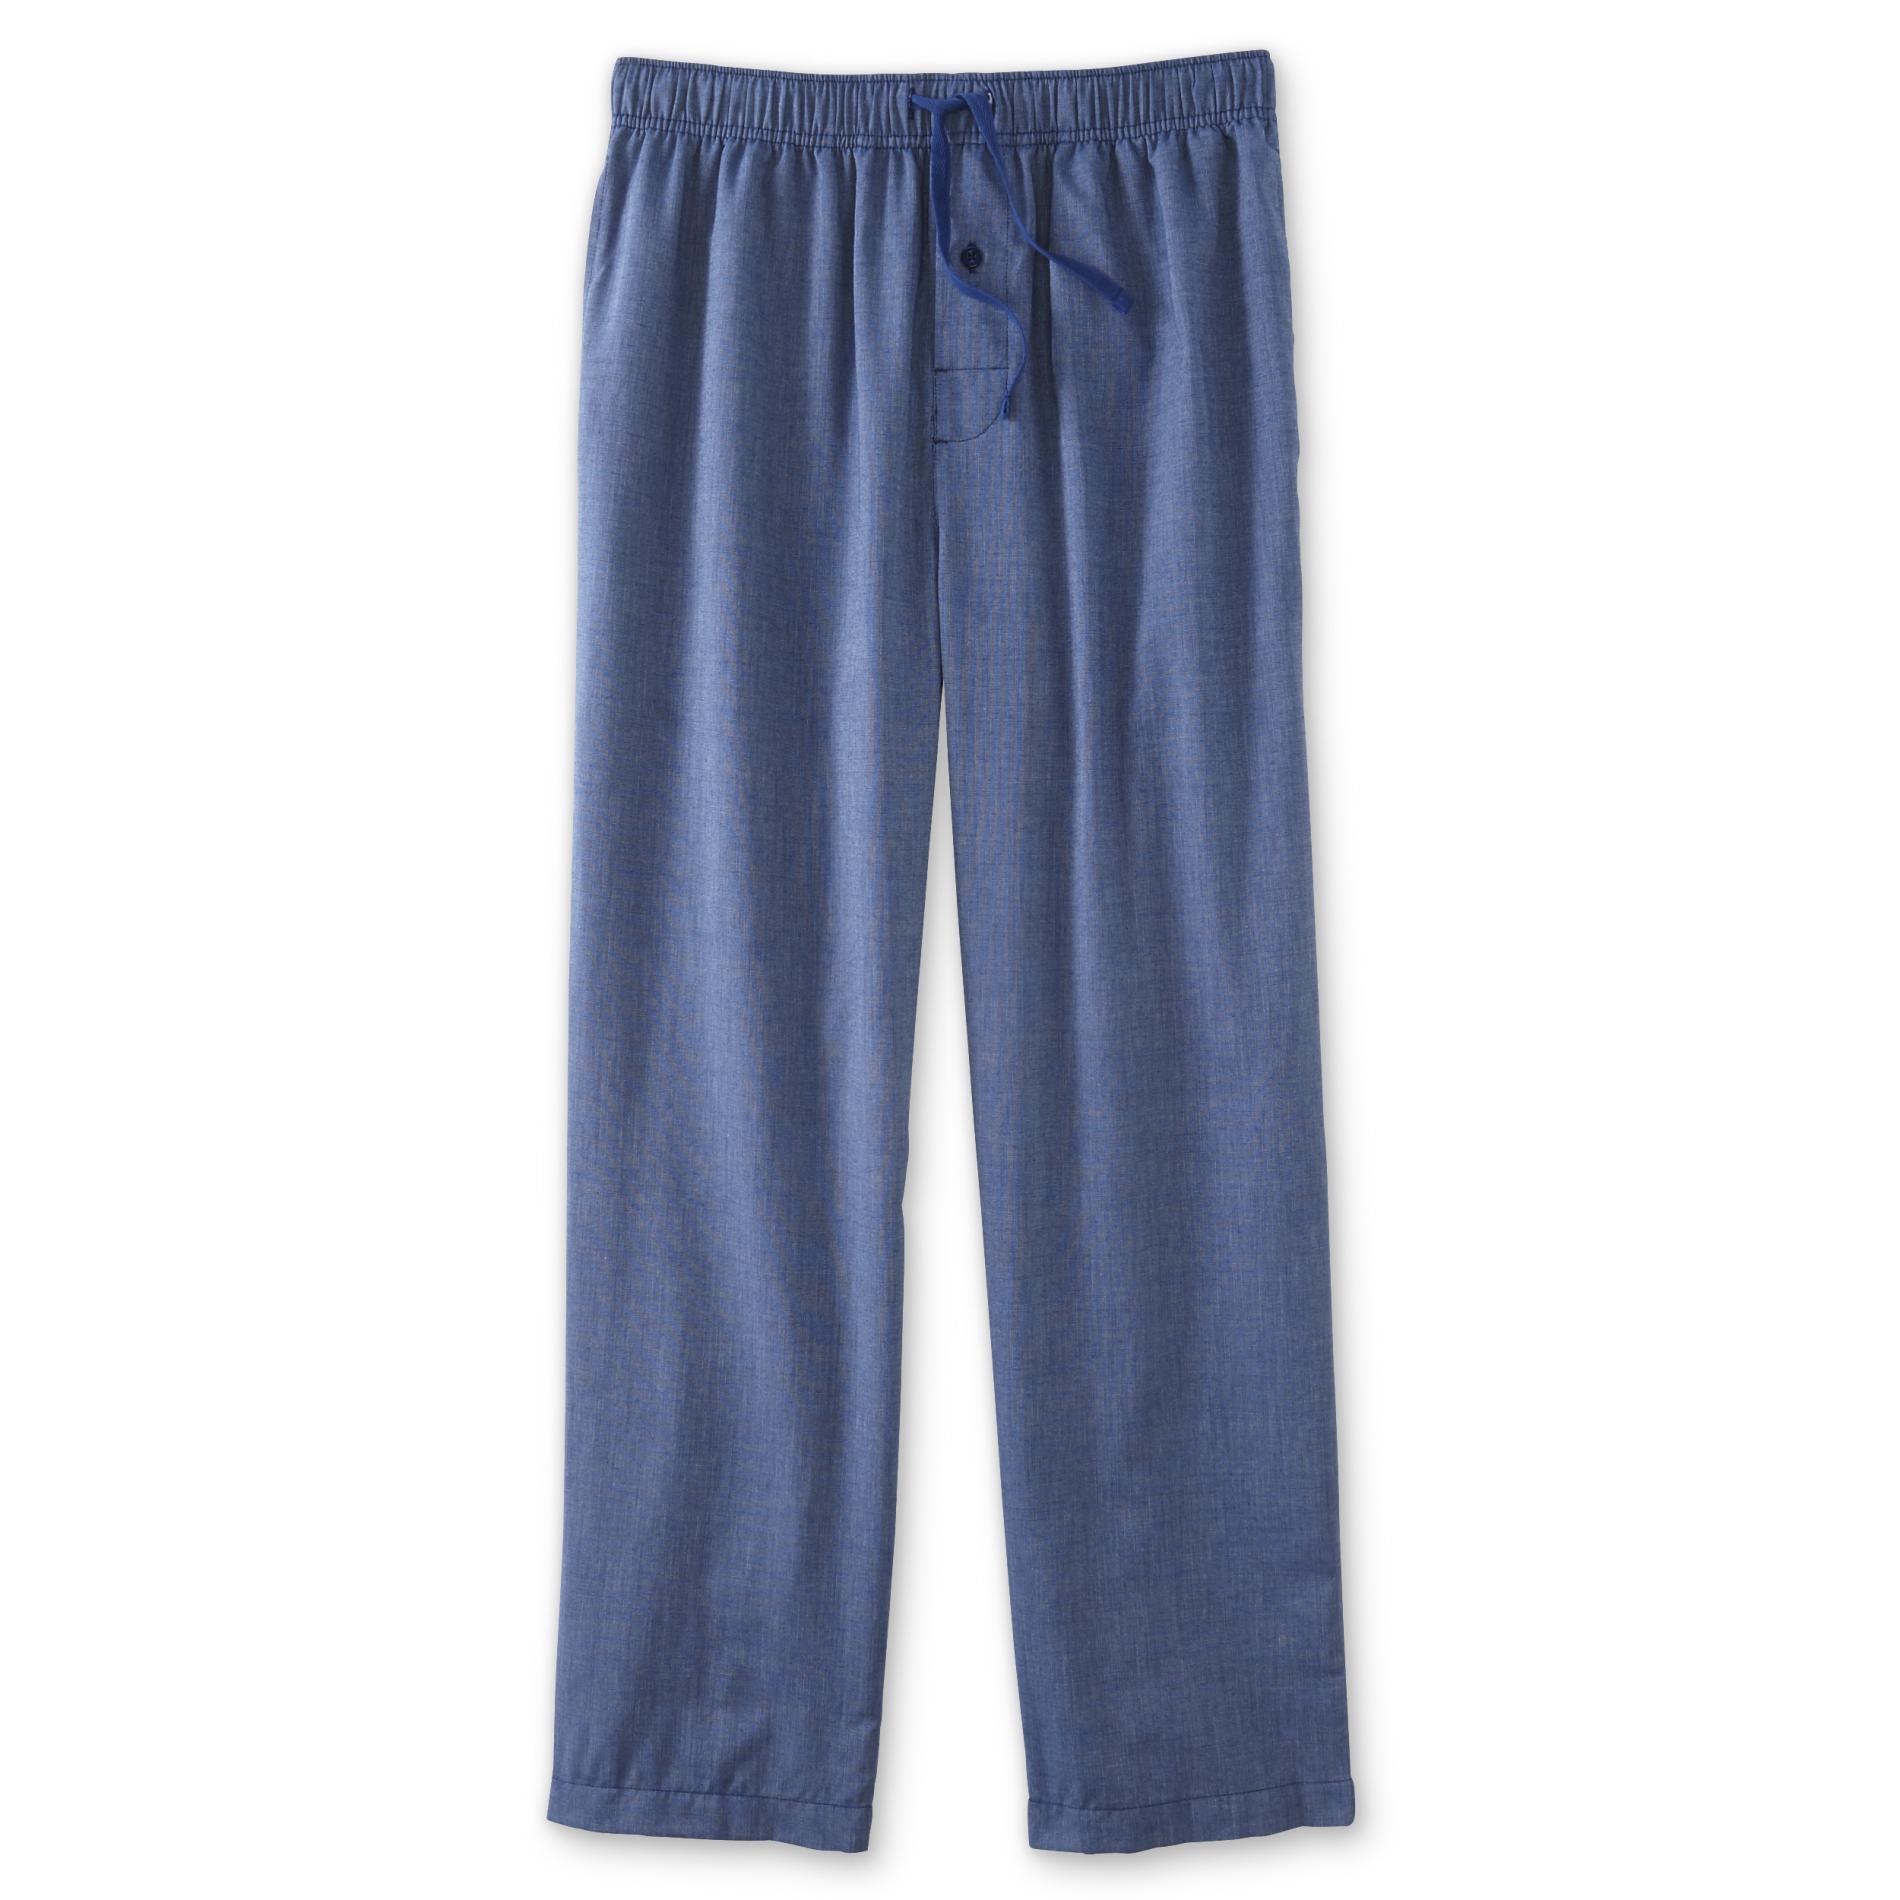 Basic Editions Men's Poplin Pajama Pants